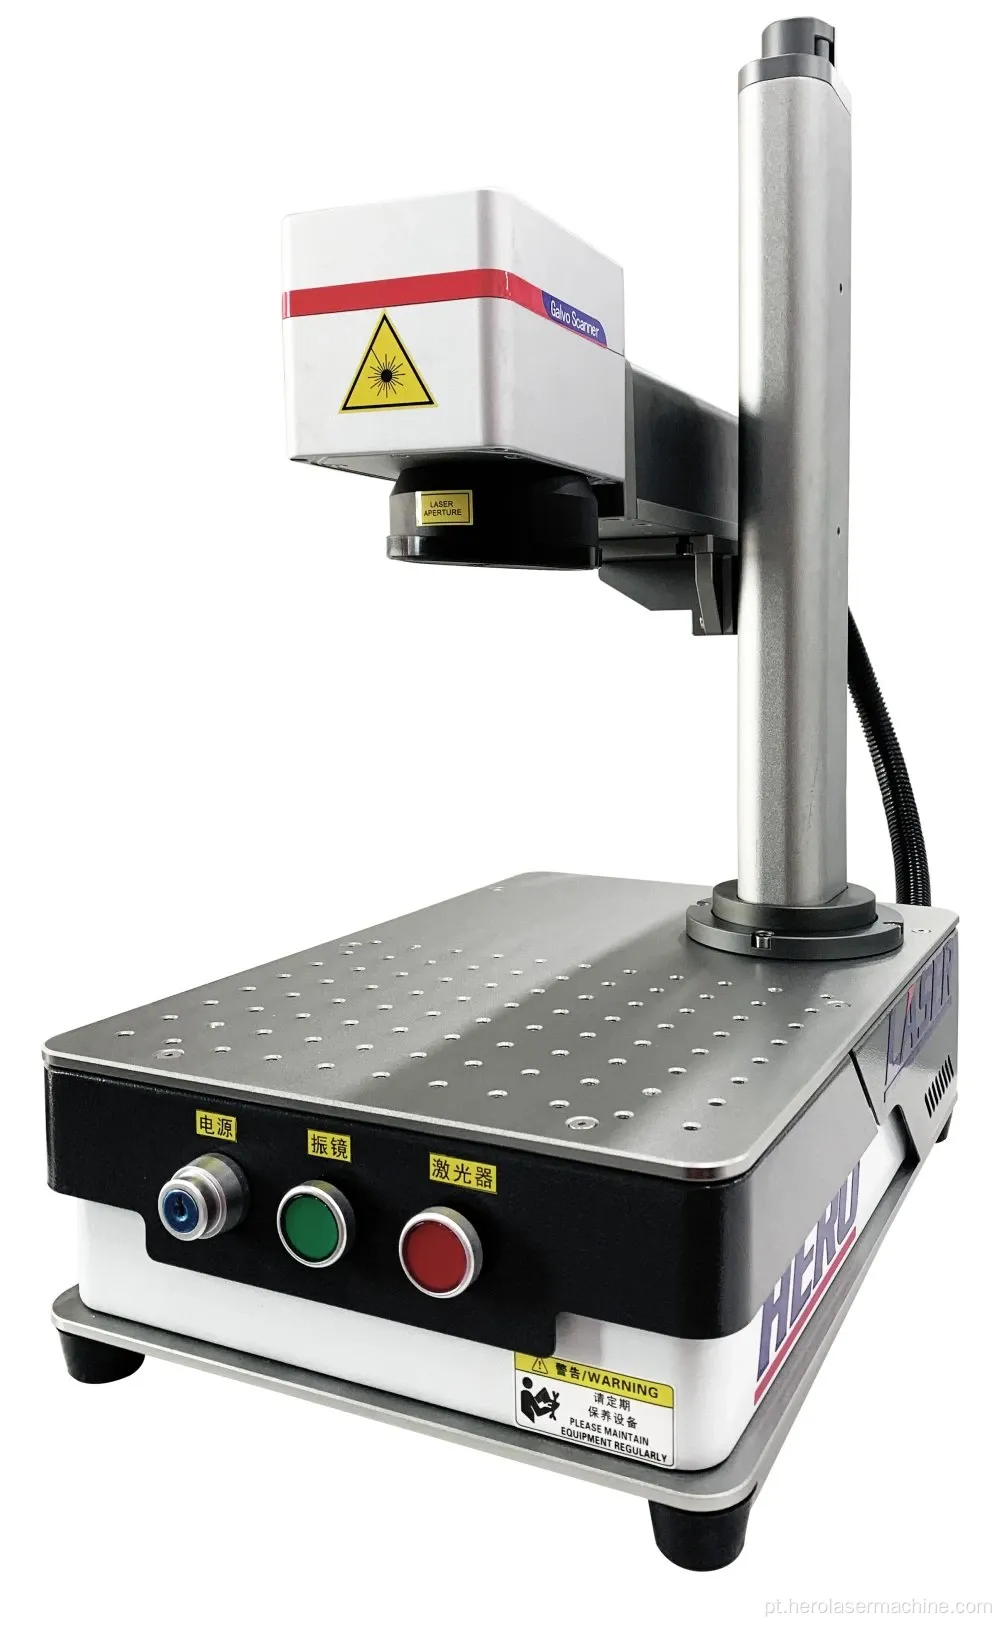 Gravador a laser para gravar acessórios de metal logotipo/chave